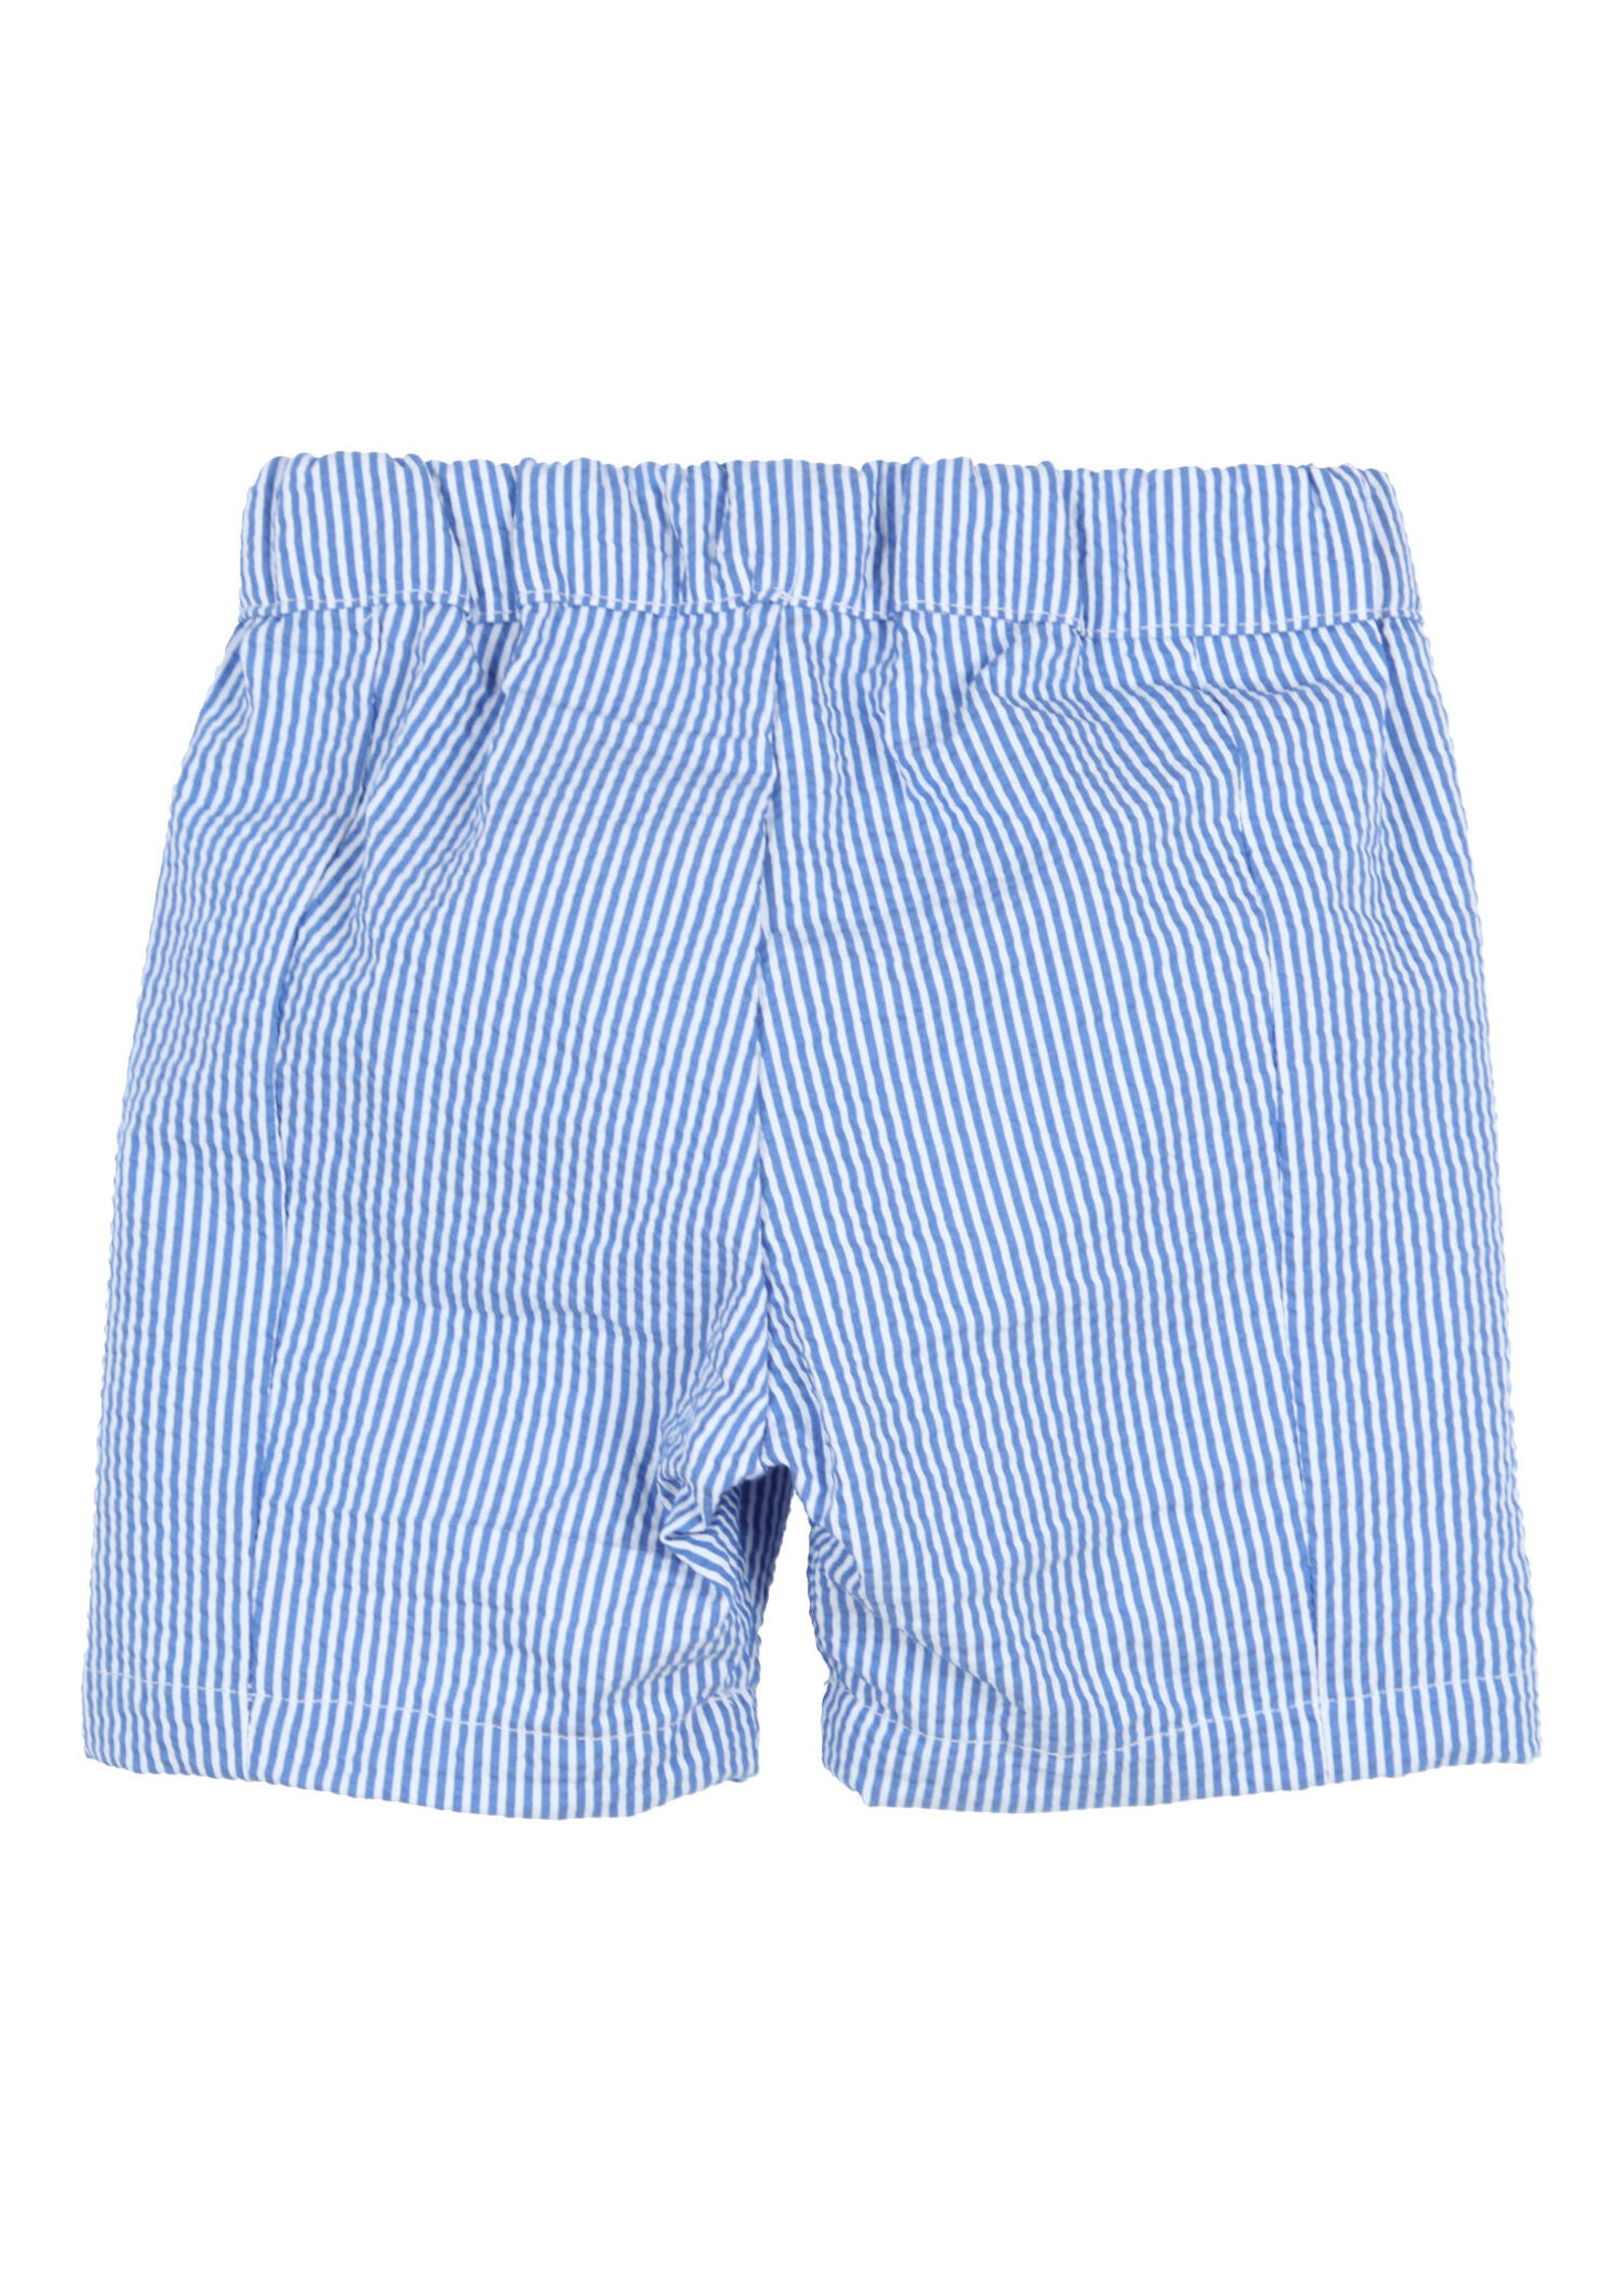 Gymp Boys Shorts Caprio 400-4146-20 Blue - White